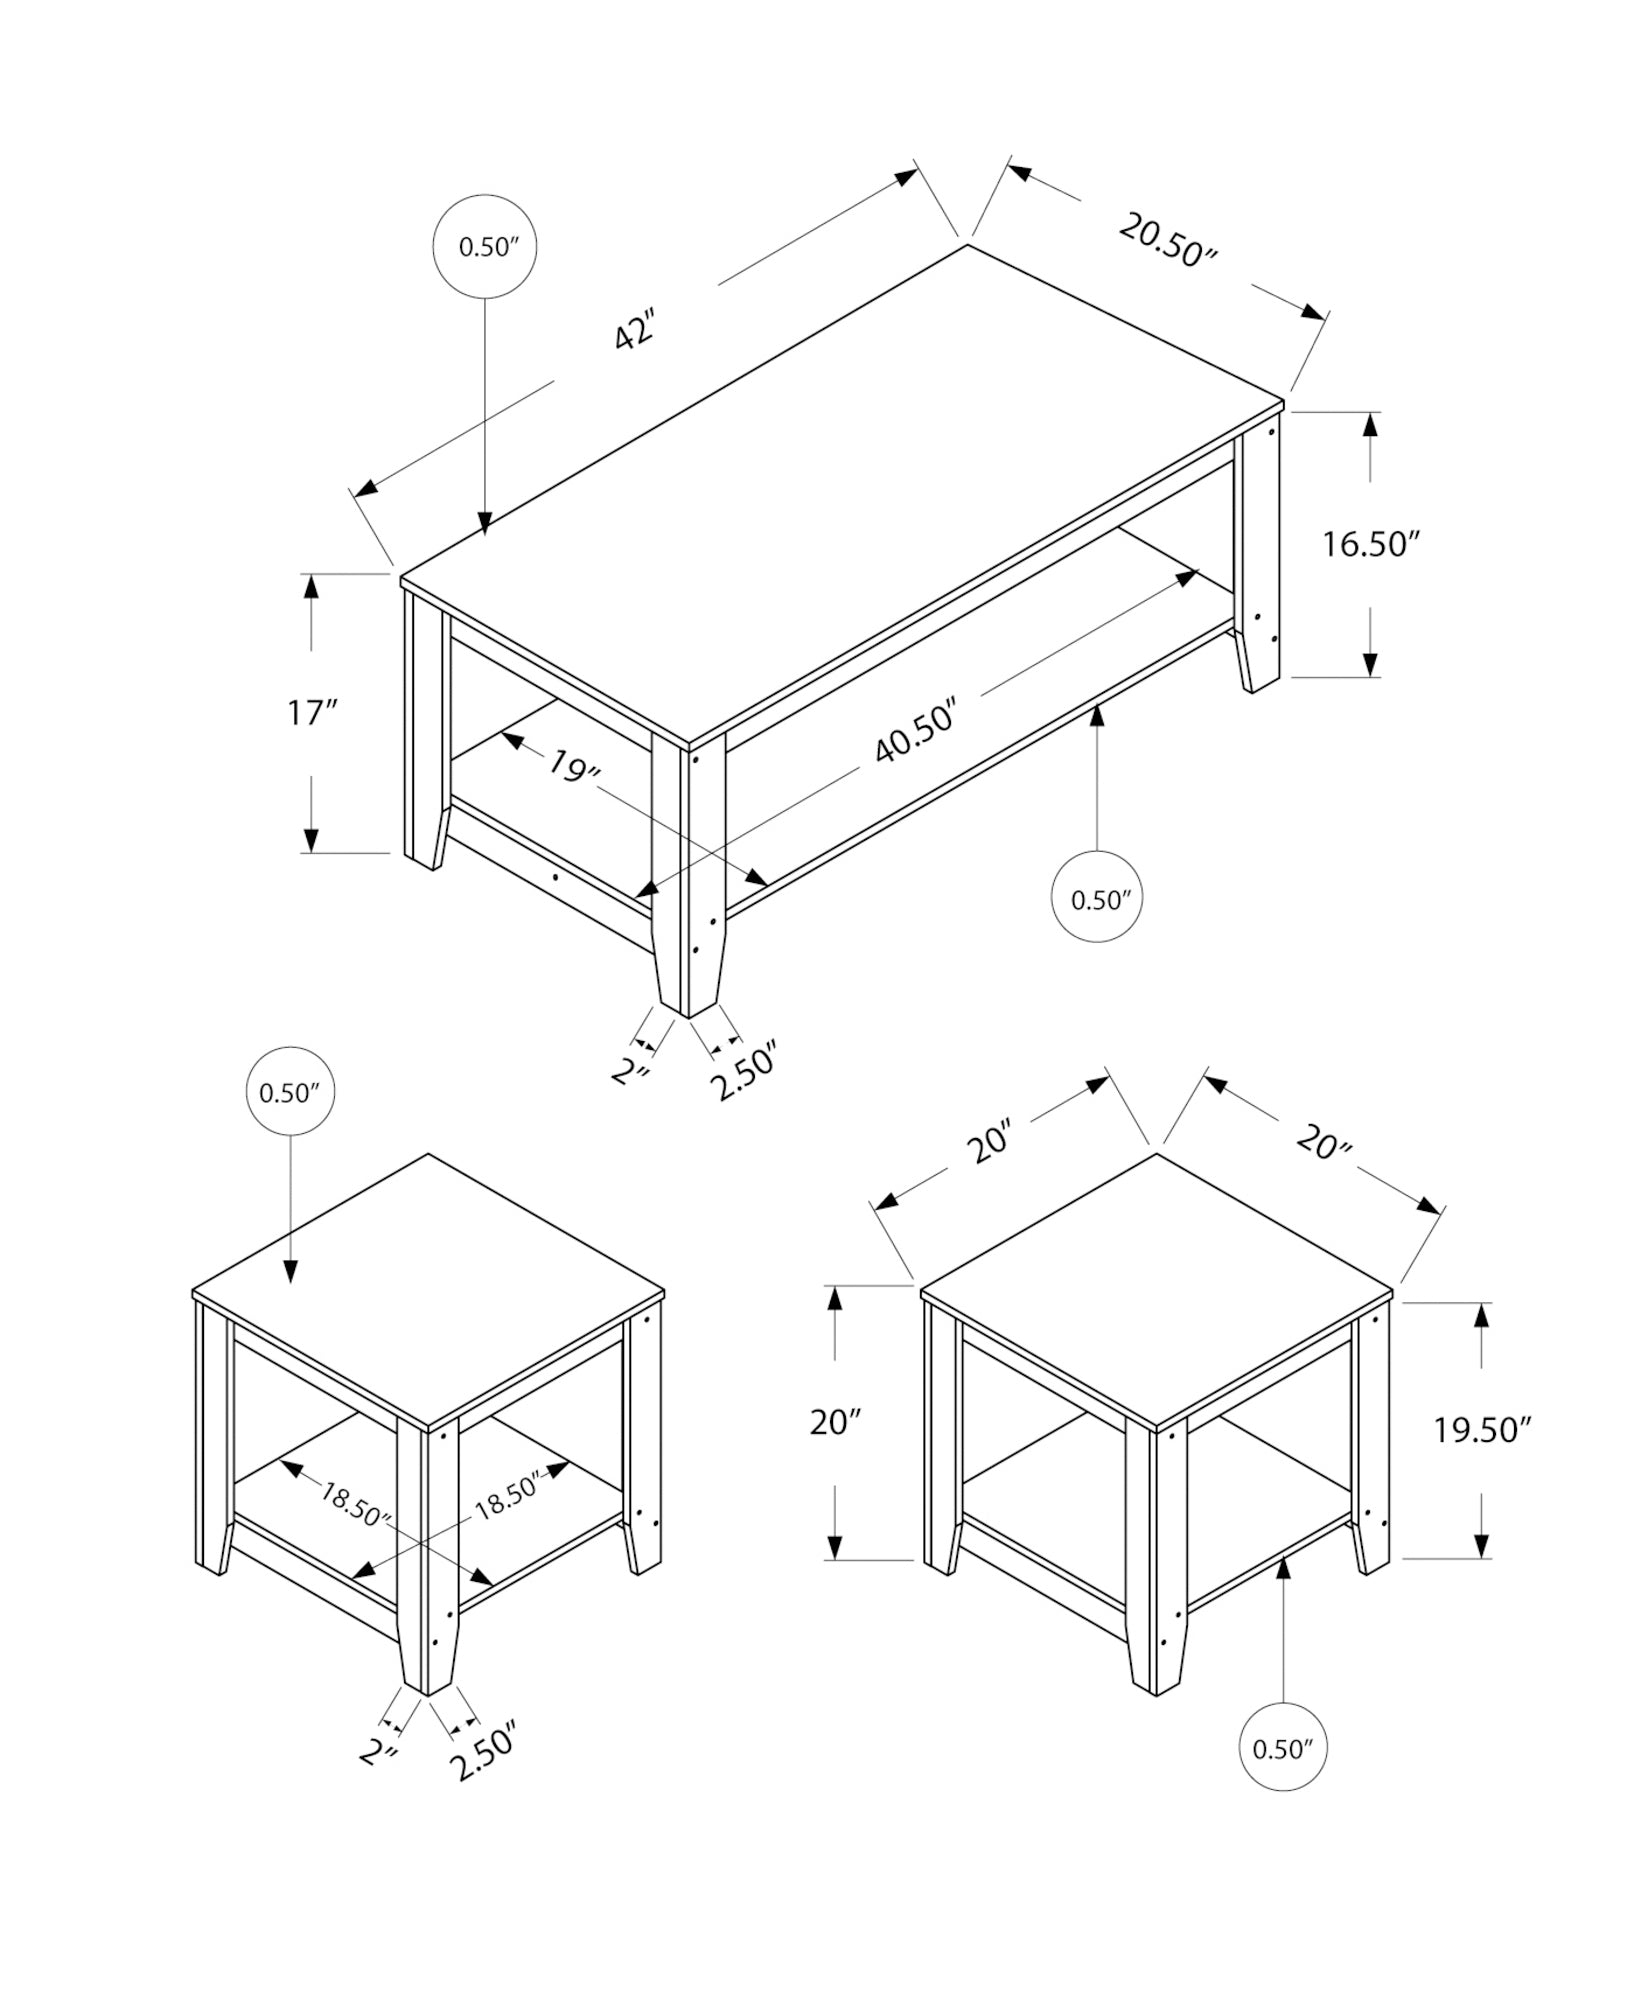 Table Set - 3Pcs Set / Black / Grey Top